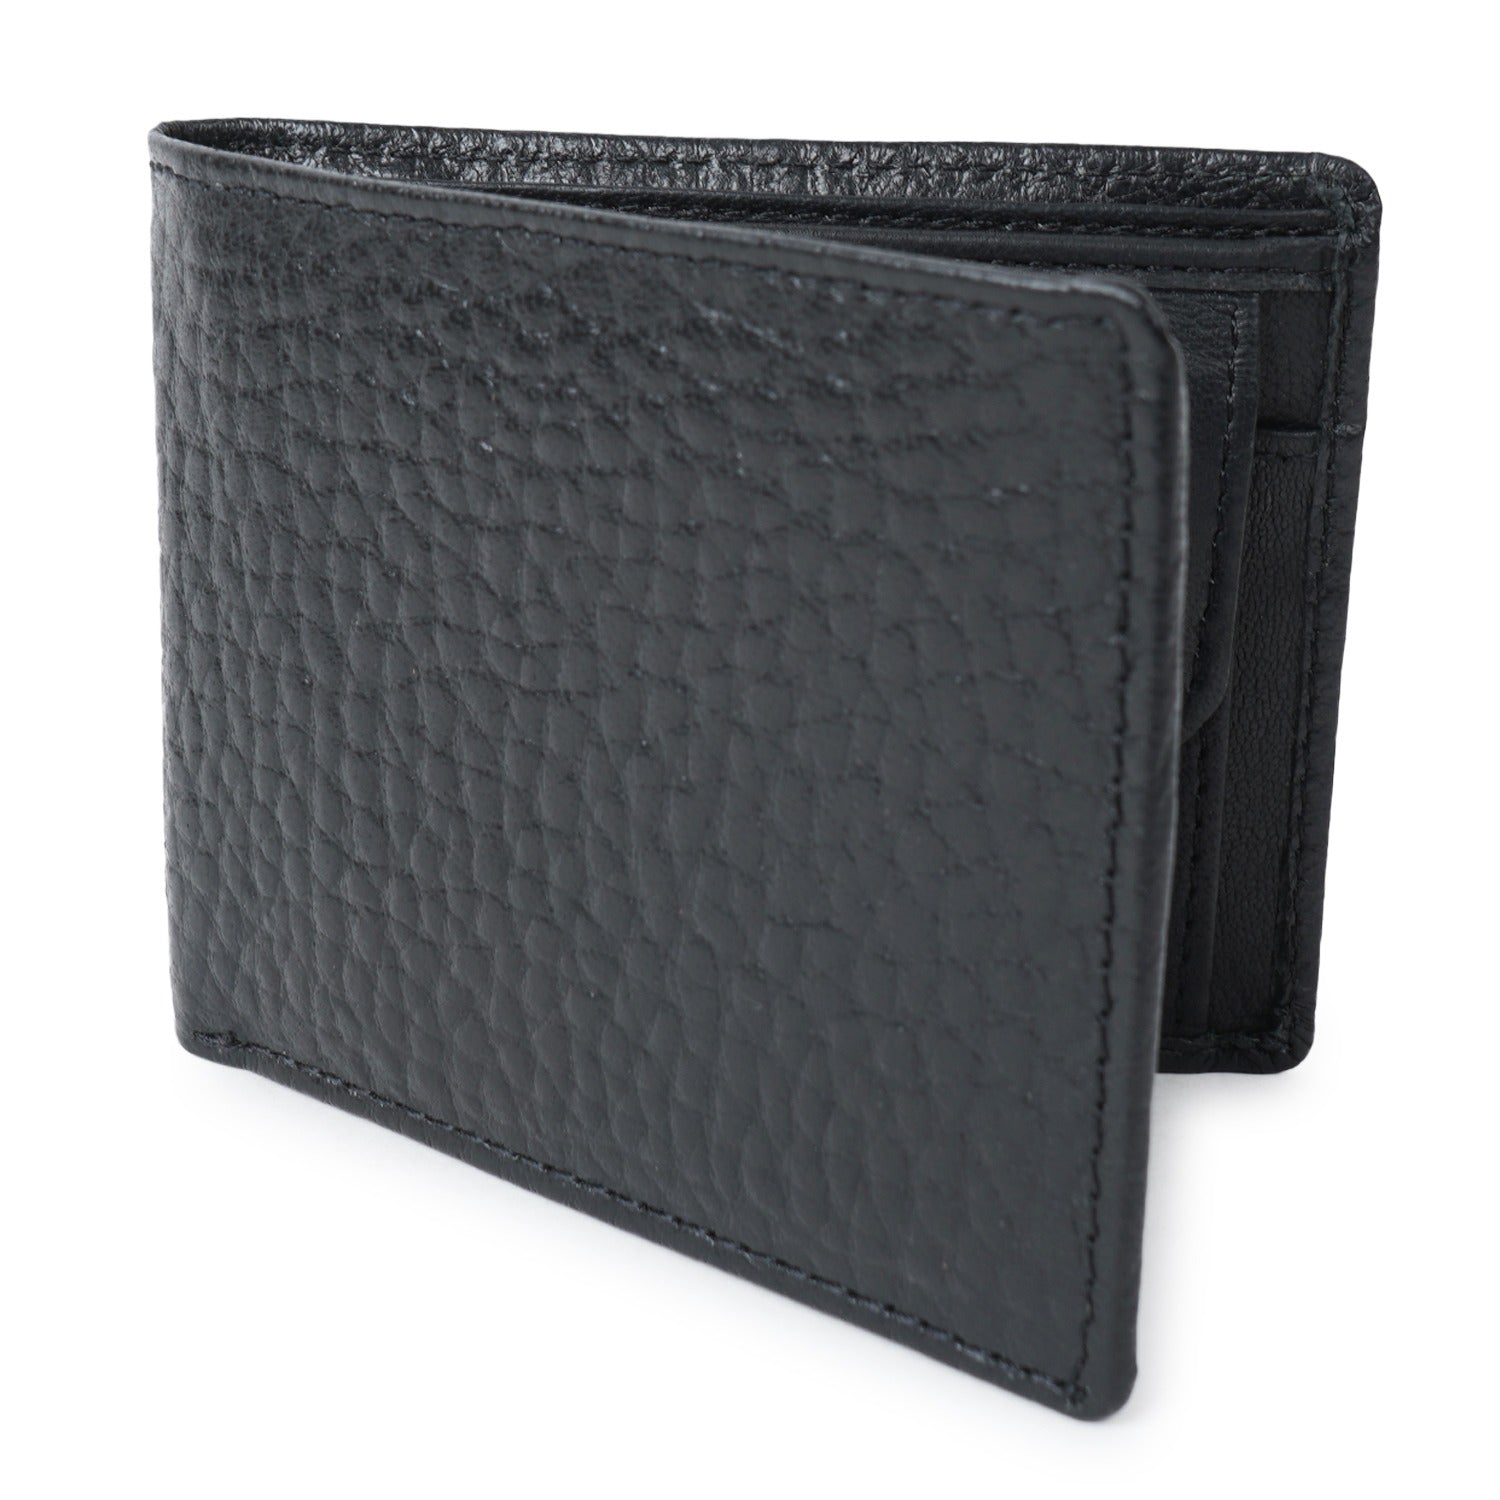 CIMONI Genuine Leather men wallet Black